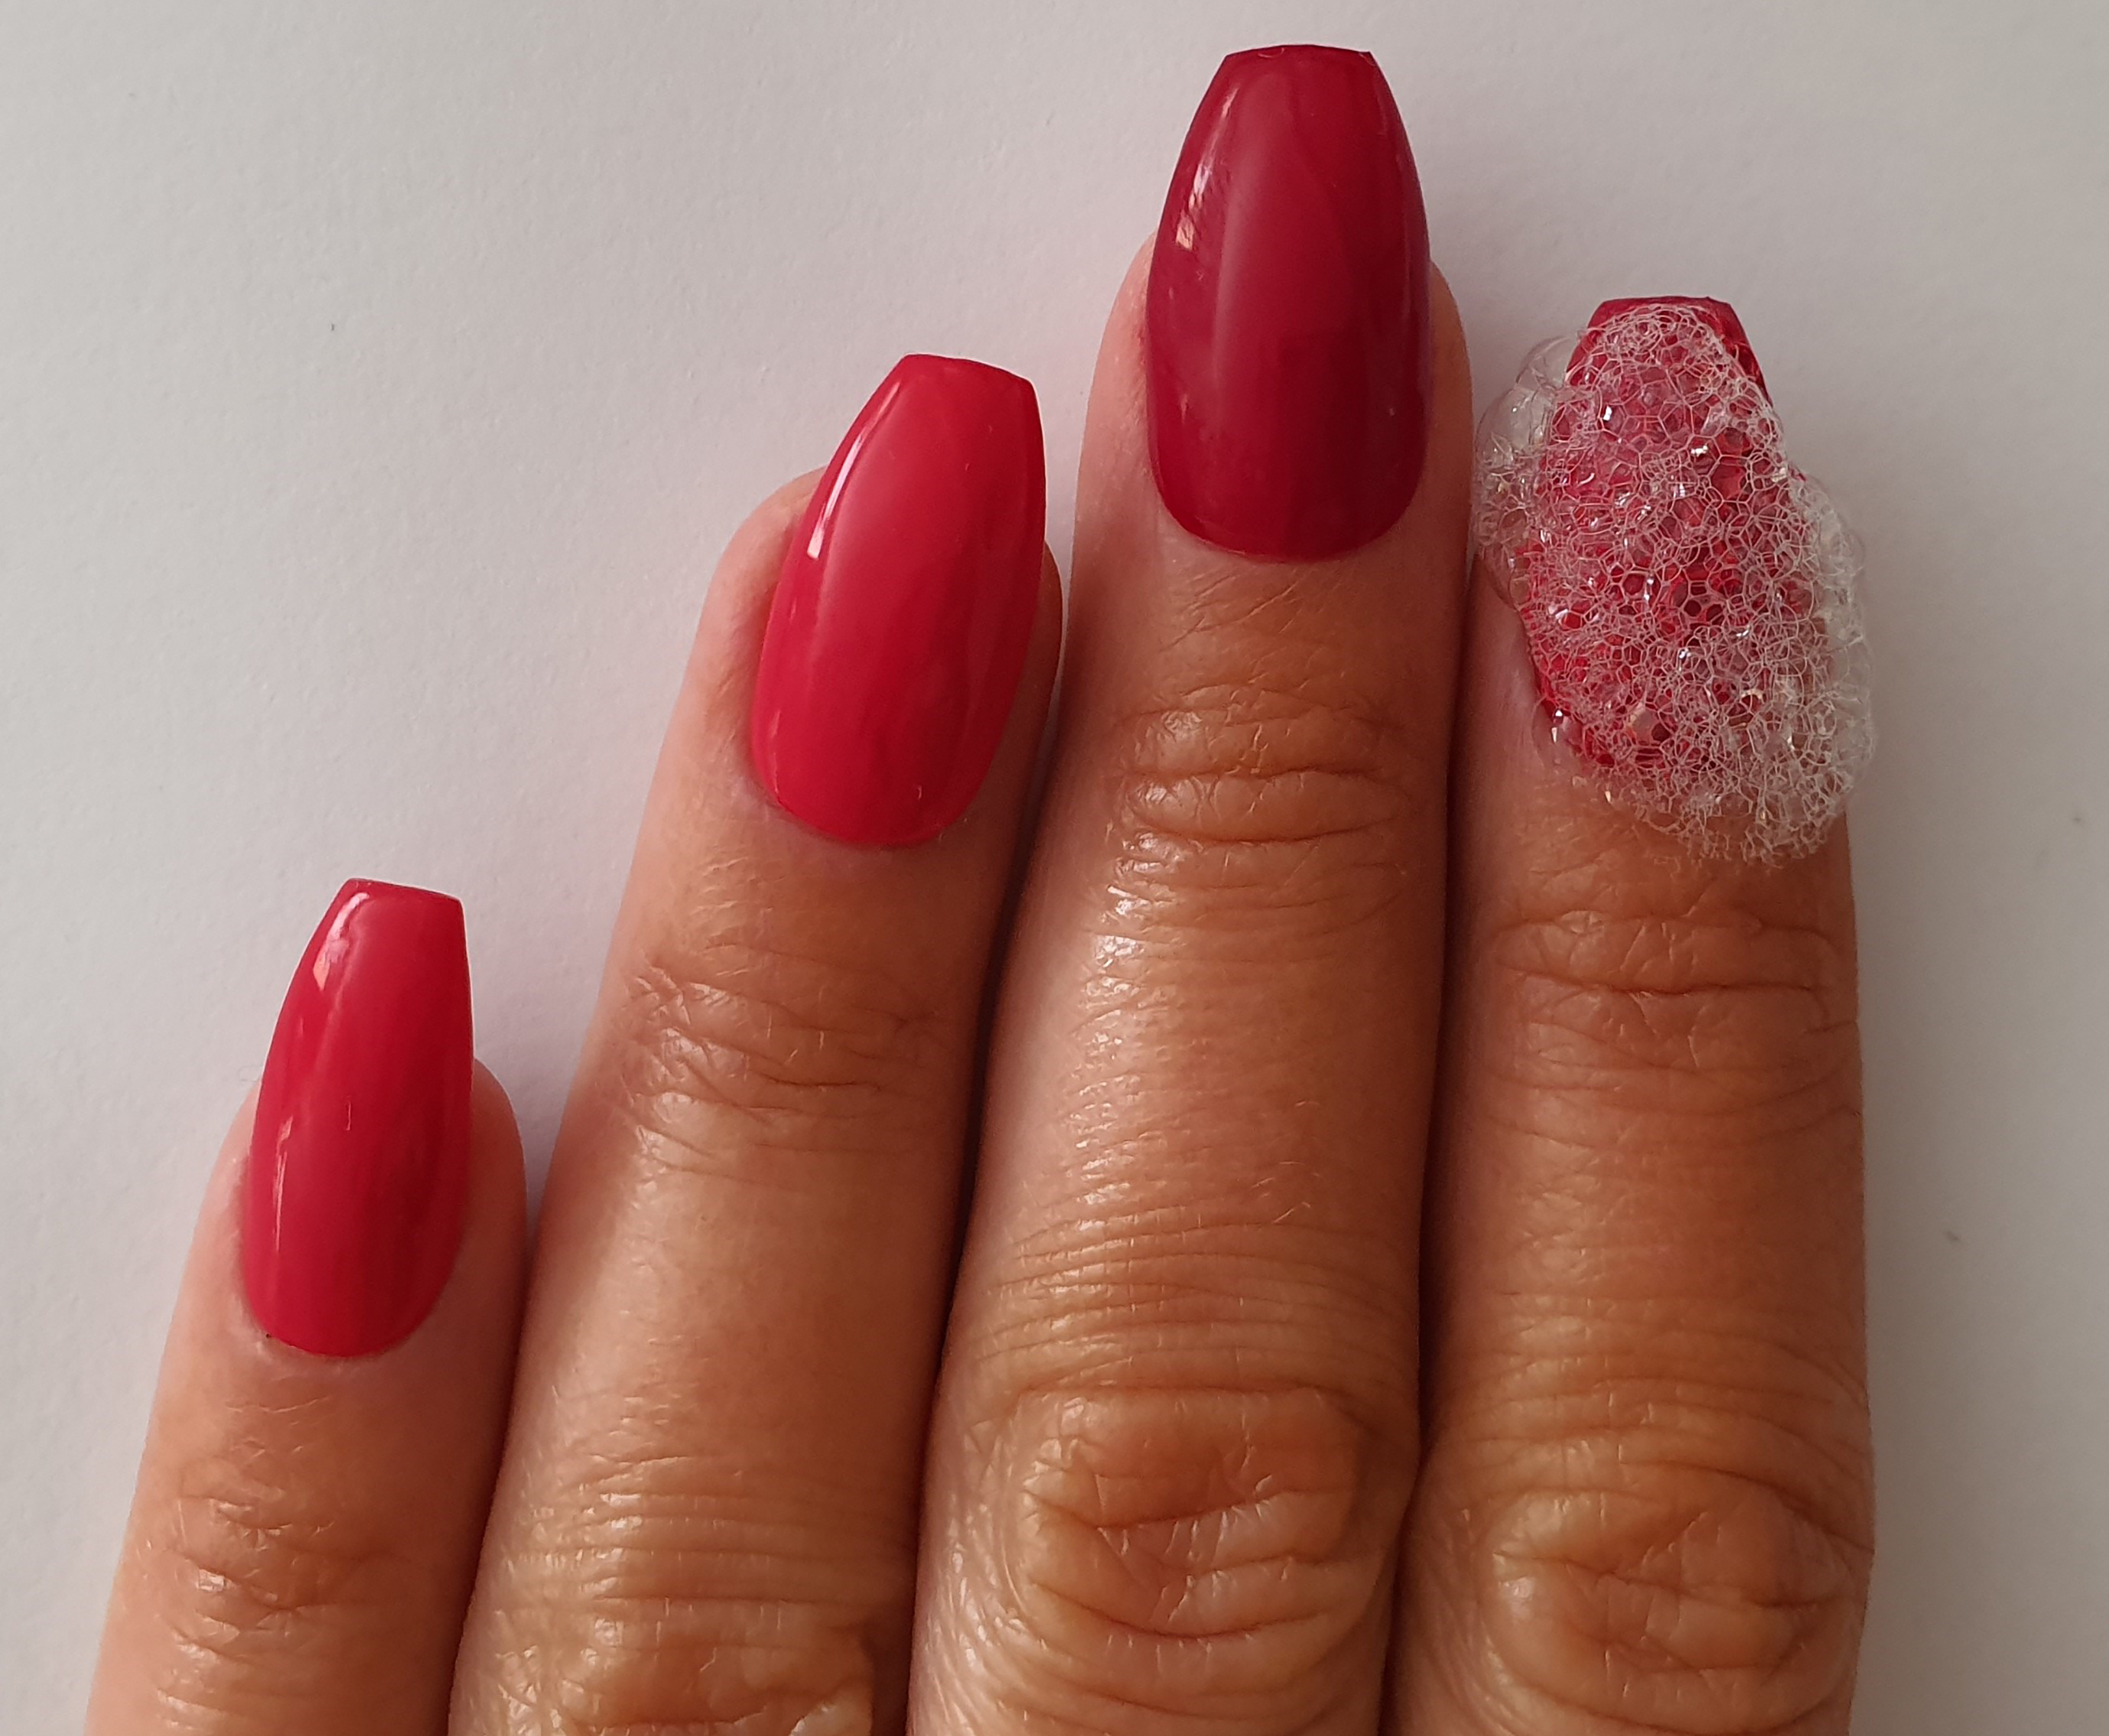 Feel the love with Salon System Nail expert Karen Louise's Valentine's-inspired nail art design